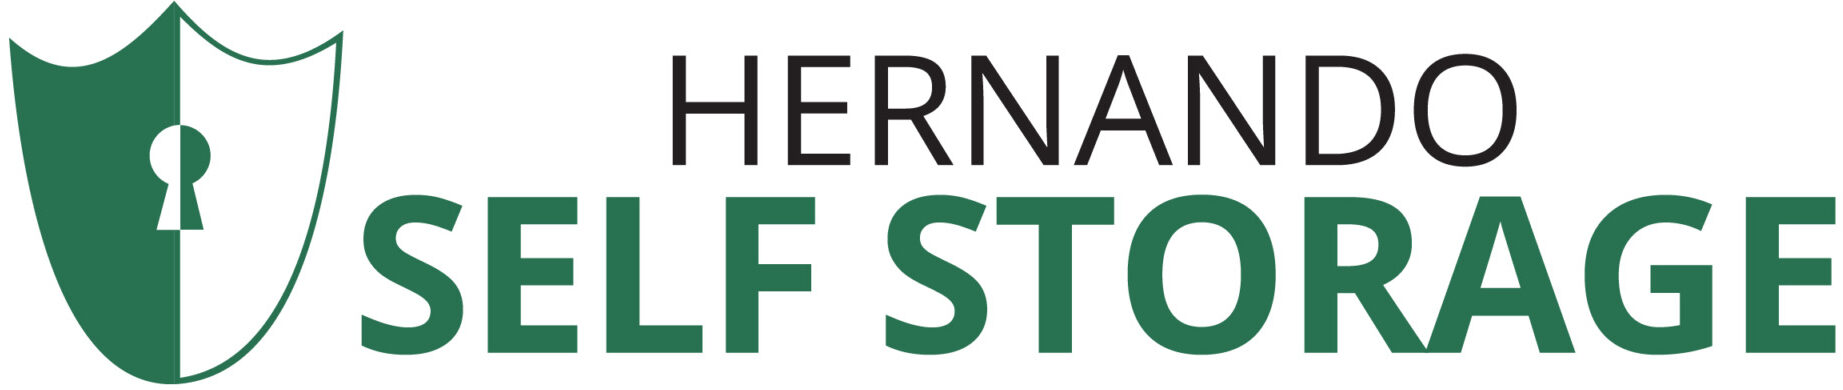 Hernando Self Storage logo.